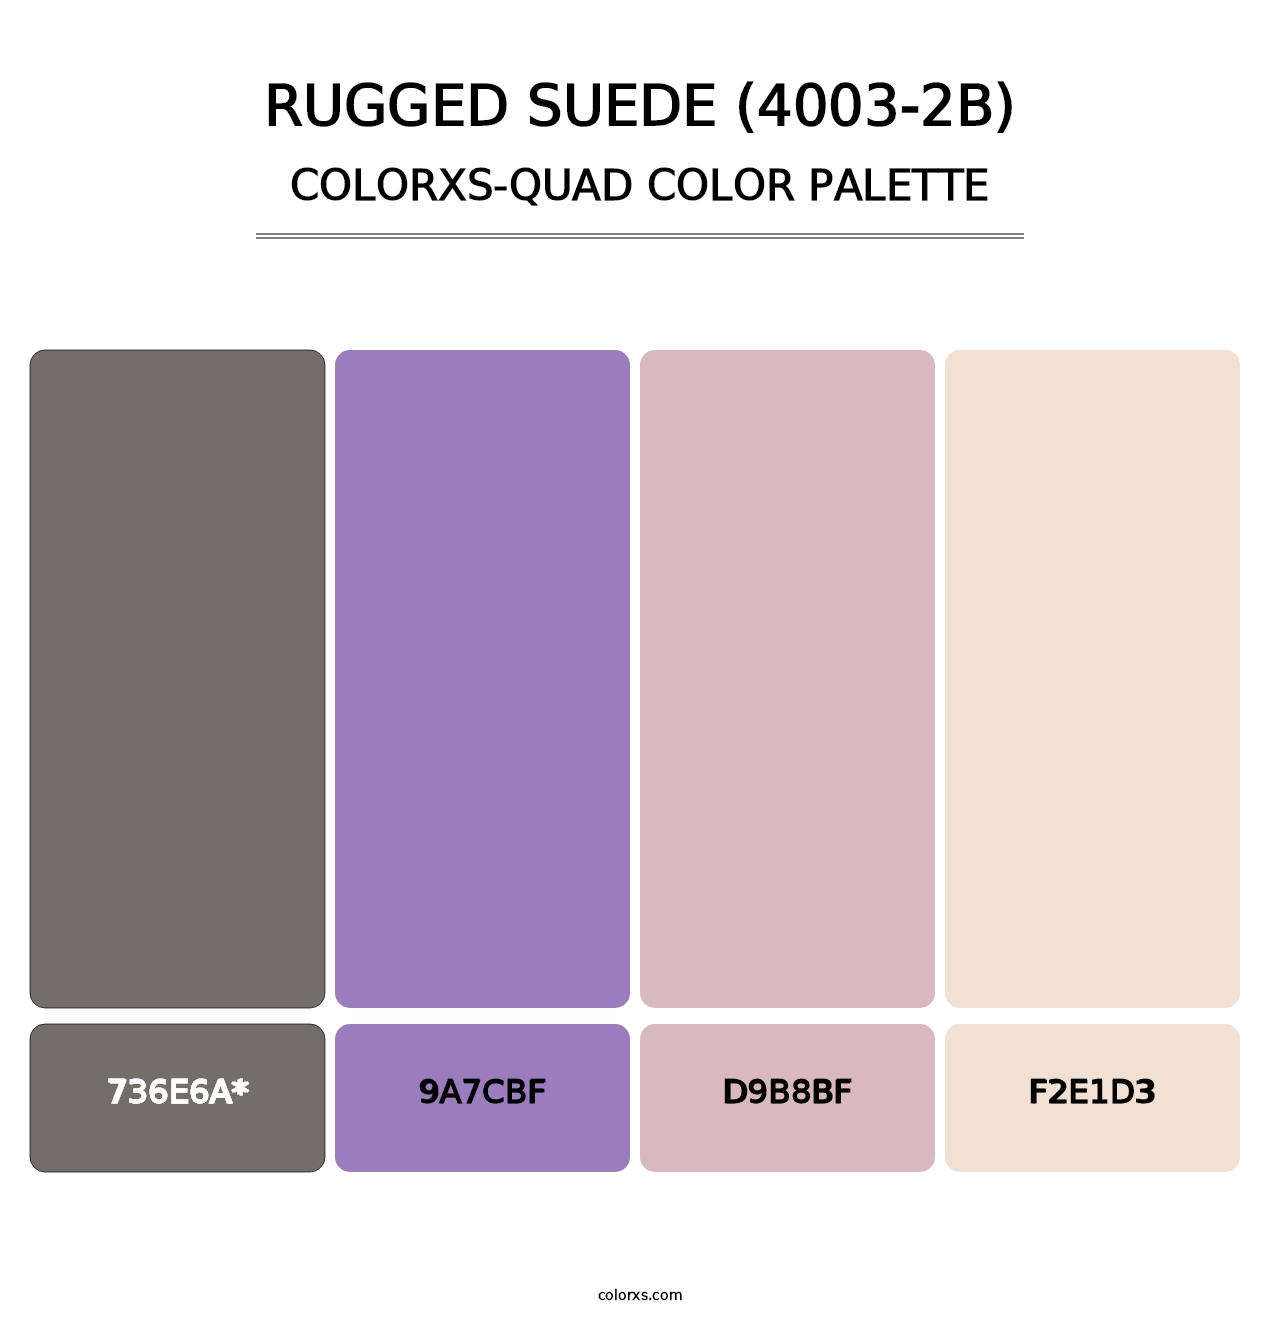 Rugged Suede (4003-2B) - Colorxs Quad Palette